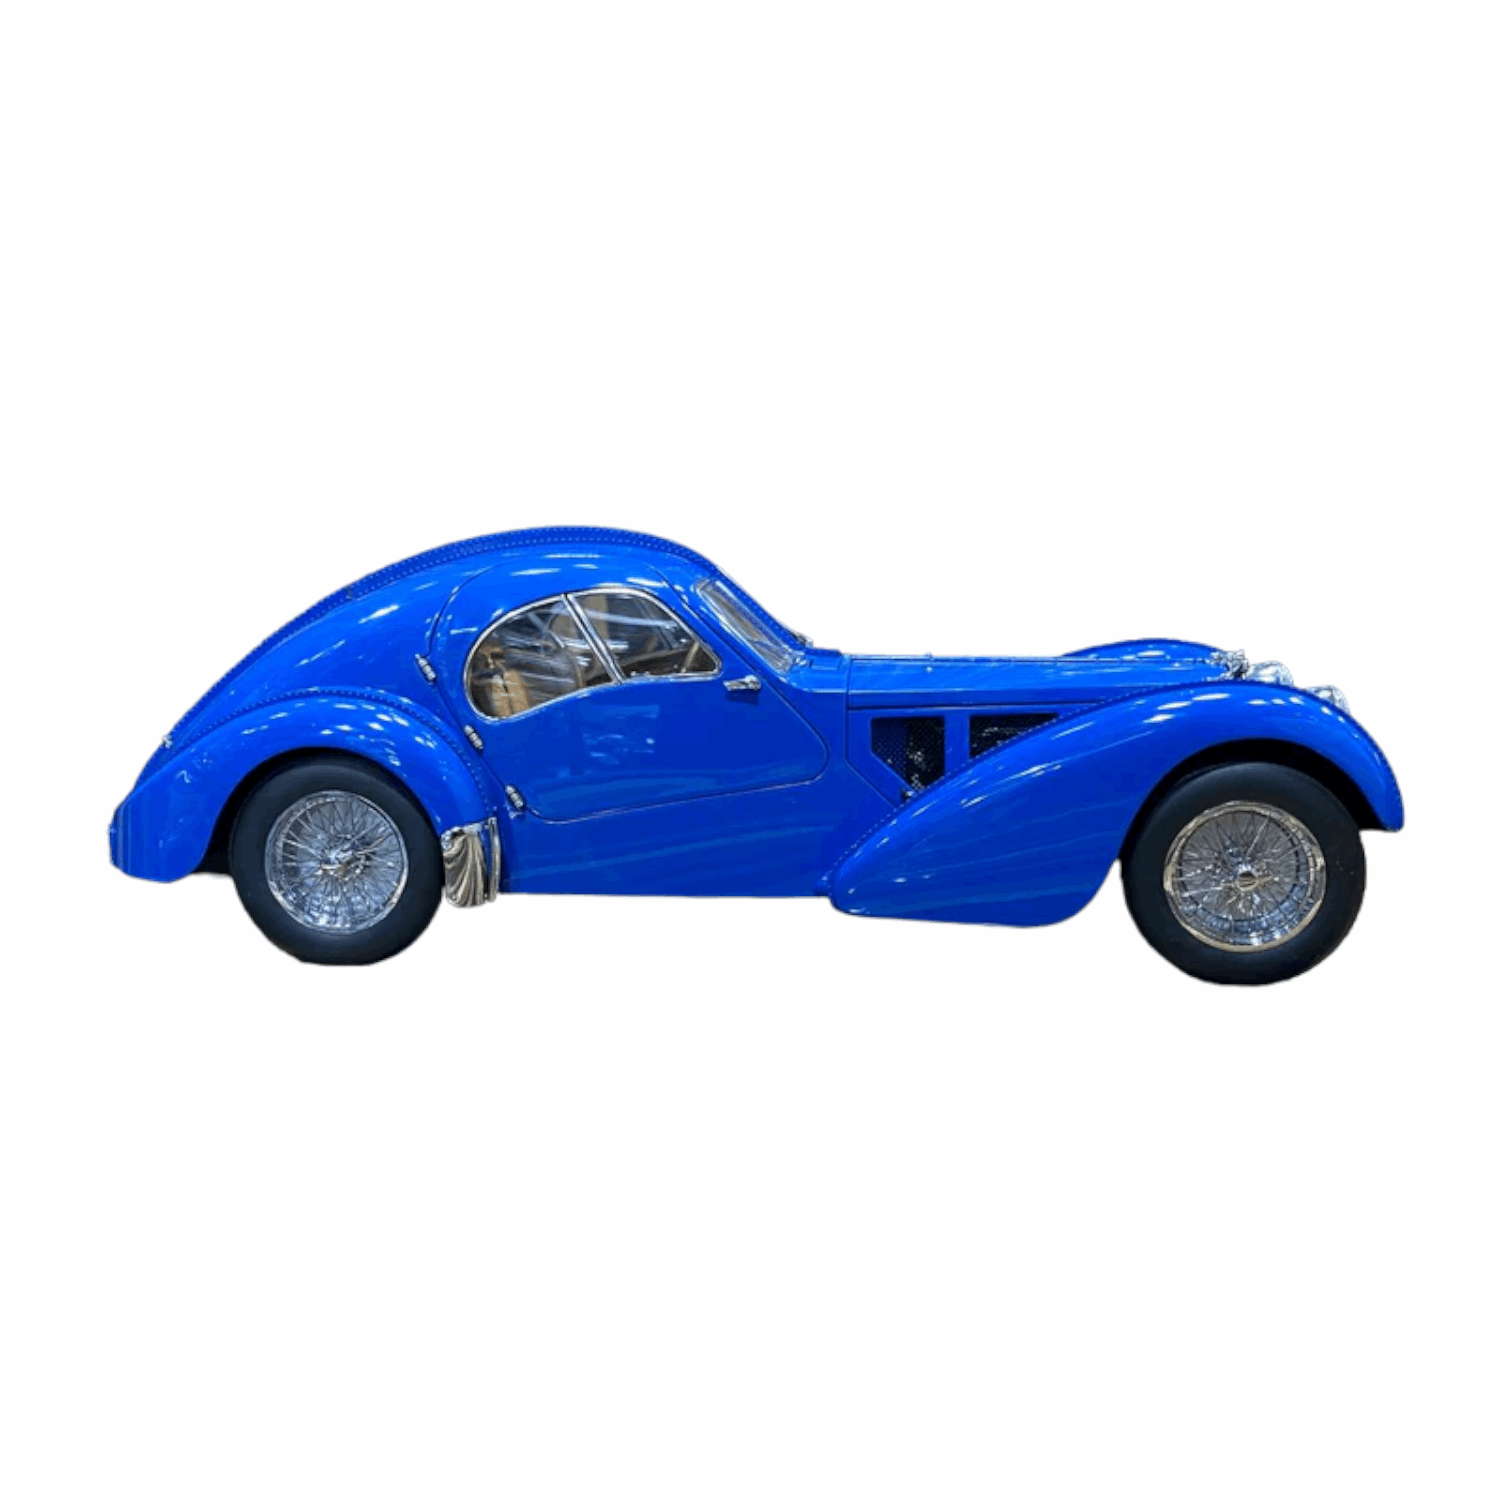 1/18 Bugatti 57S Atlantic 1938 Blue by AUTOart Scale Model Car|Sold in Dturman.com Dubai UAE.